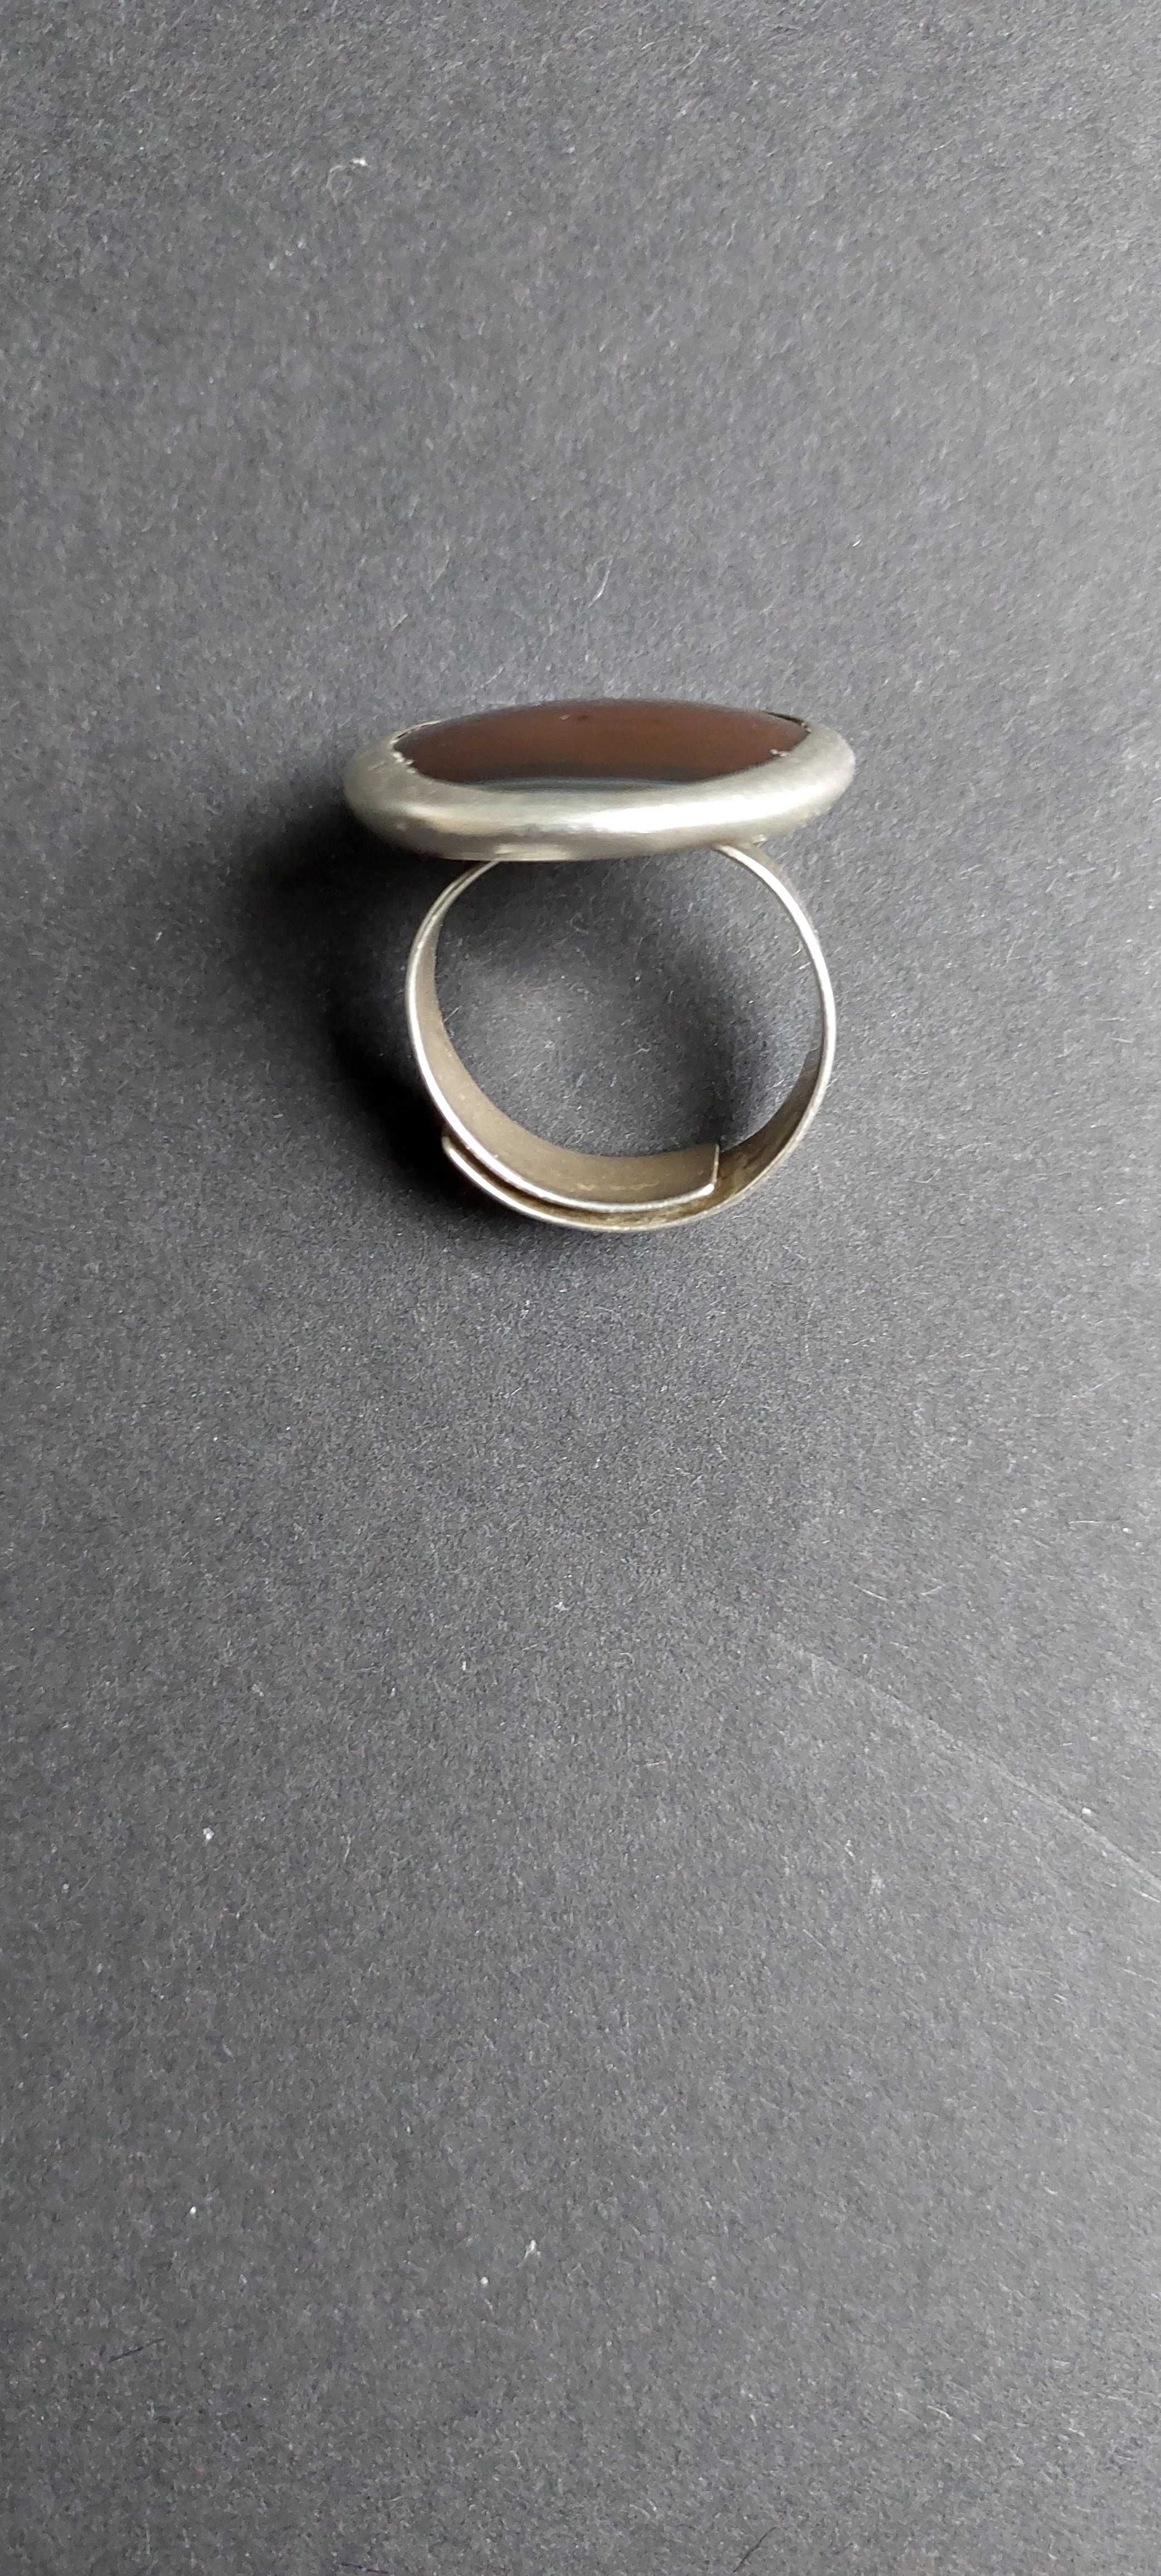 Pierścionek srebrny z kamieniem